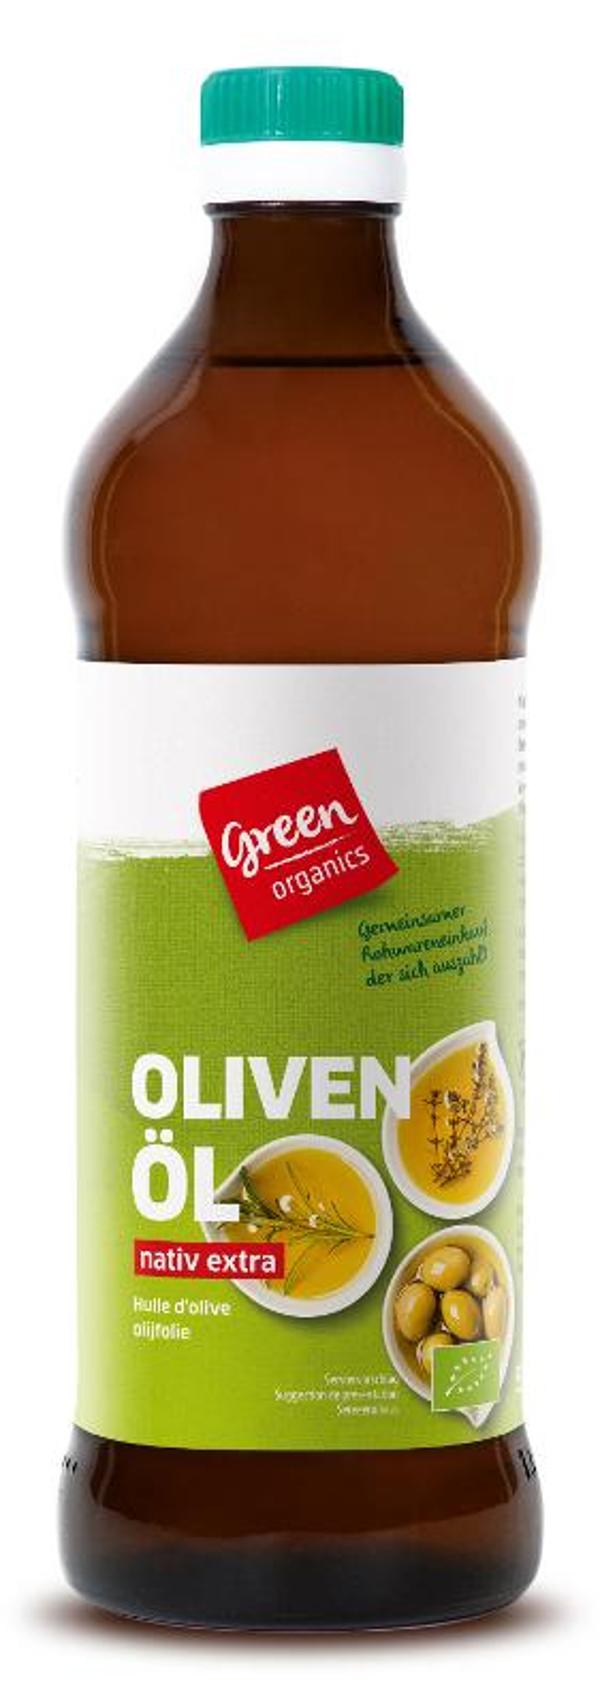 Produktfoto zu Olivenöl nativ extra